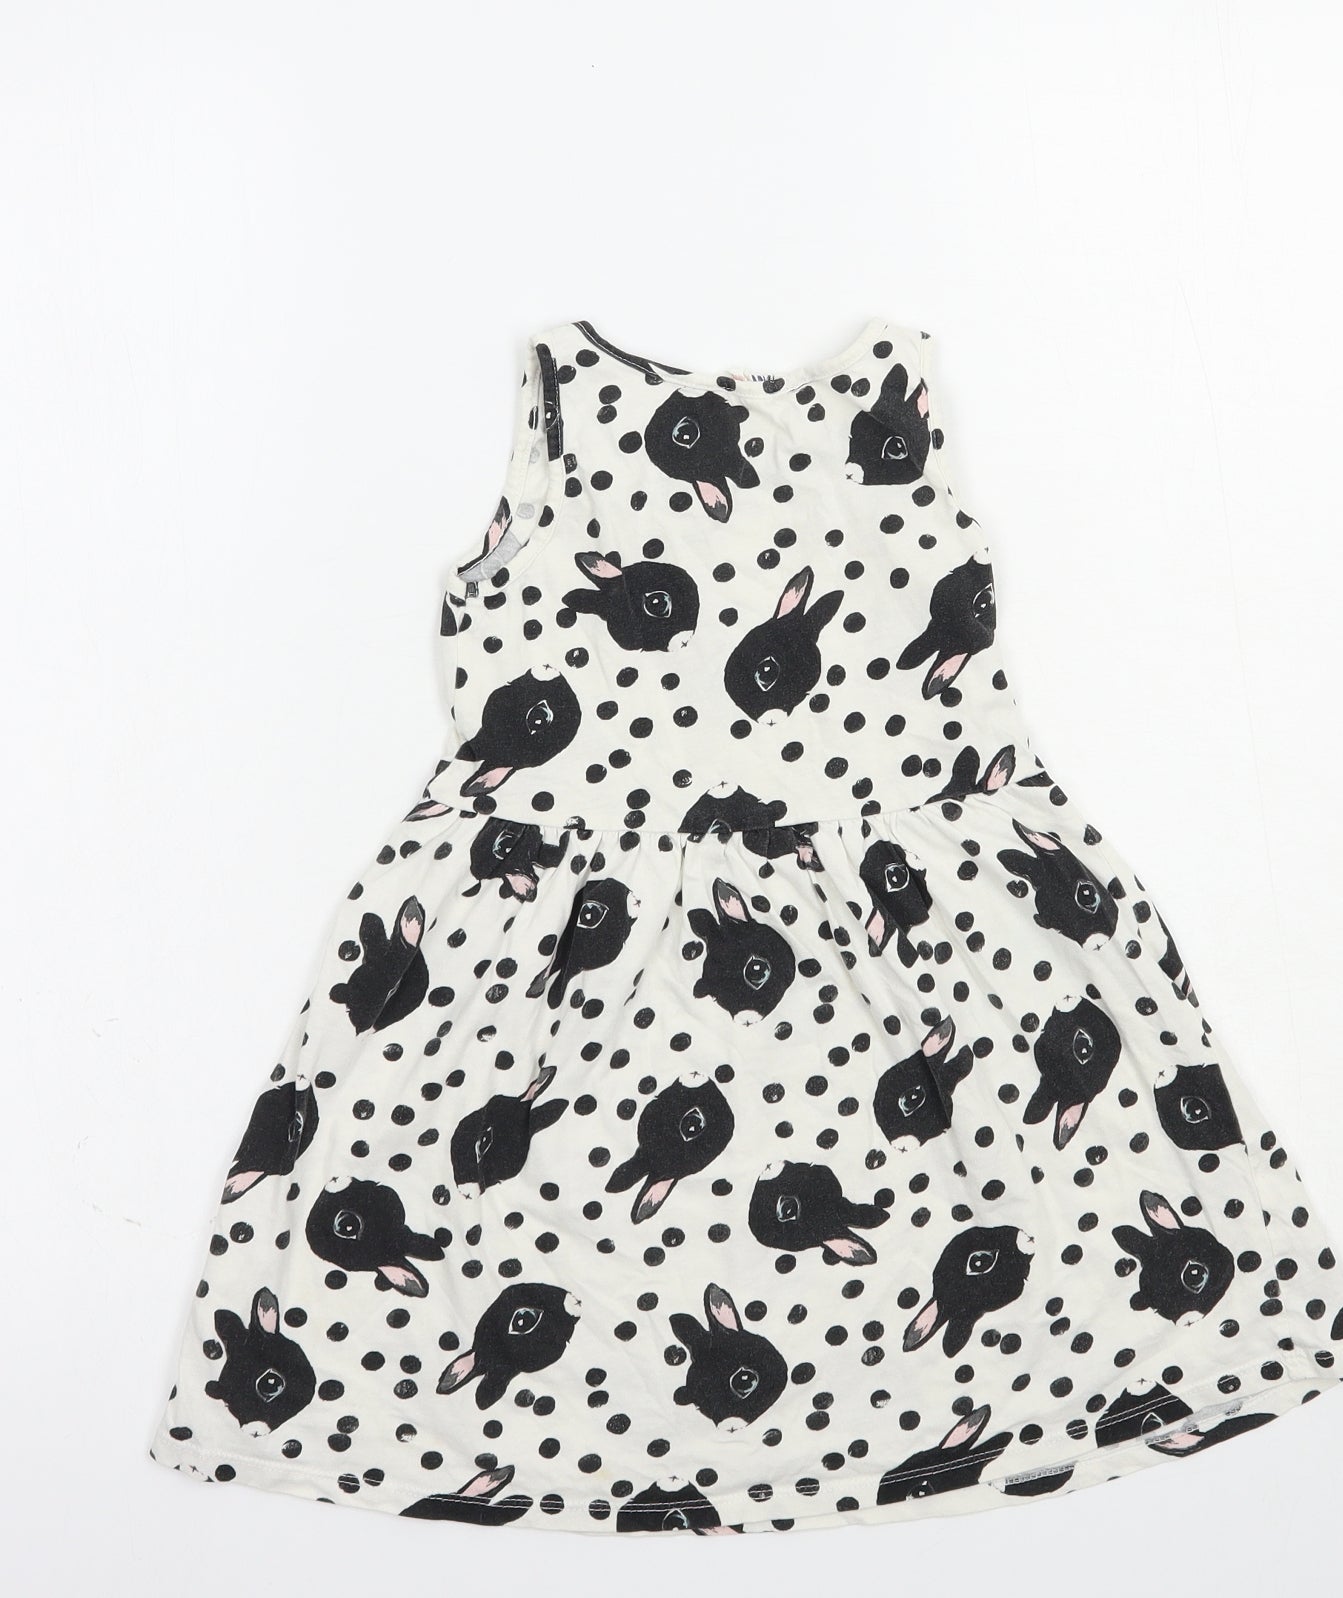 H&M Girls White Geometric Cotton Tank Dress  Size 4-5 Years  Crew Neck Pullover - Bunny Print